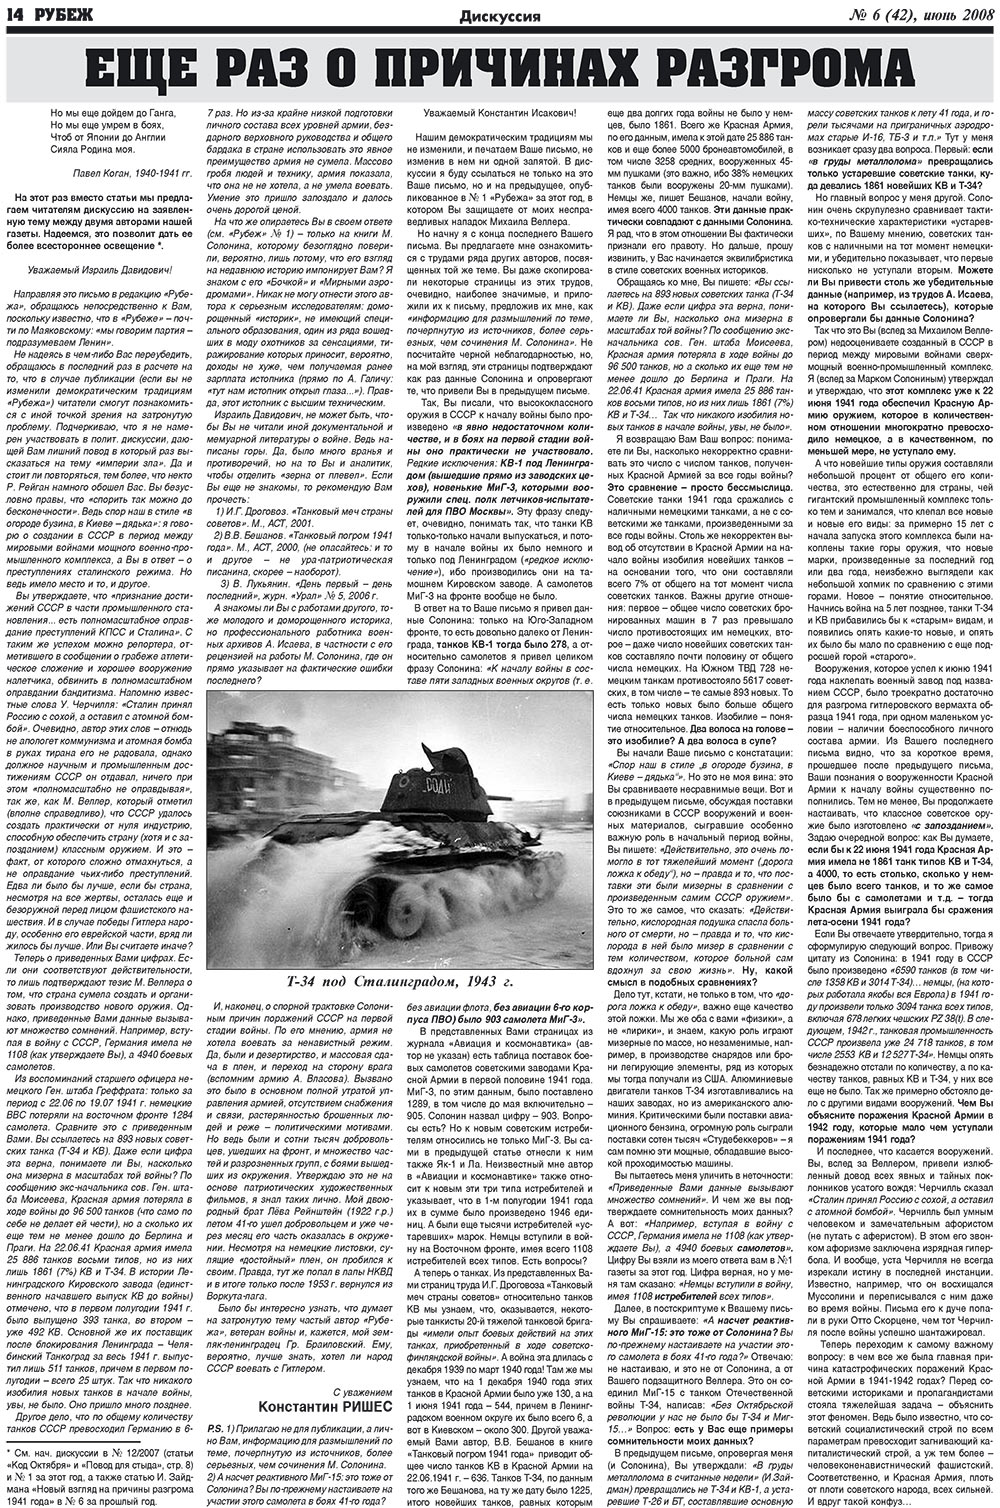 Рубеж, газета. 2008 №6 стр.14